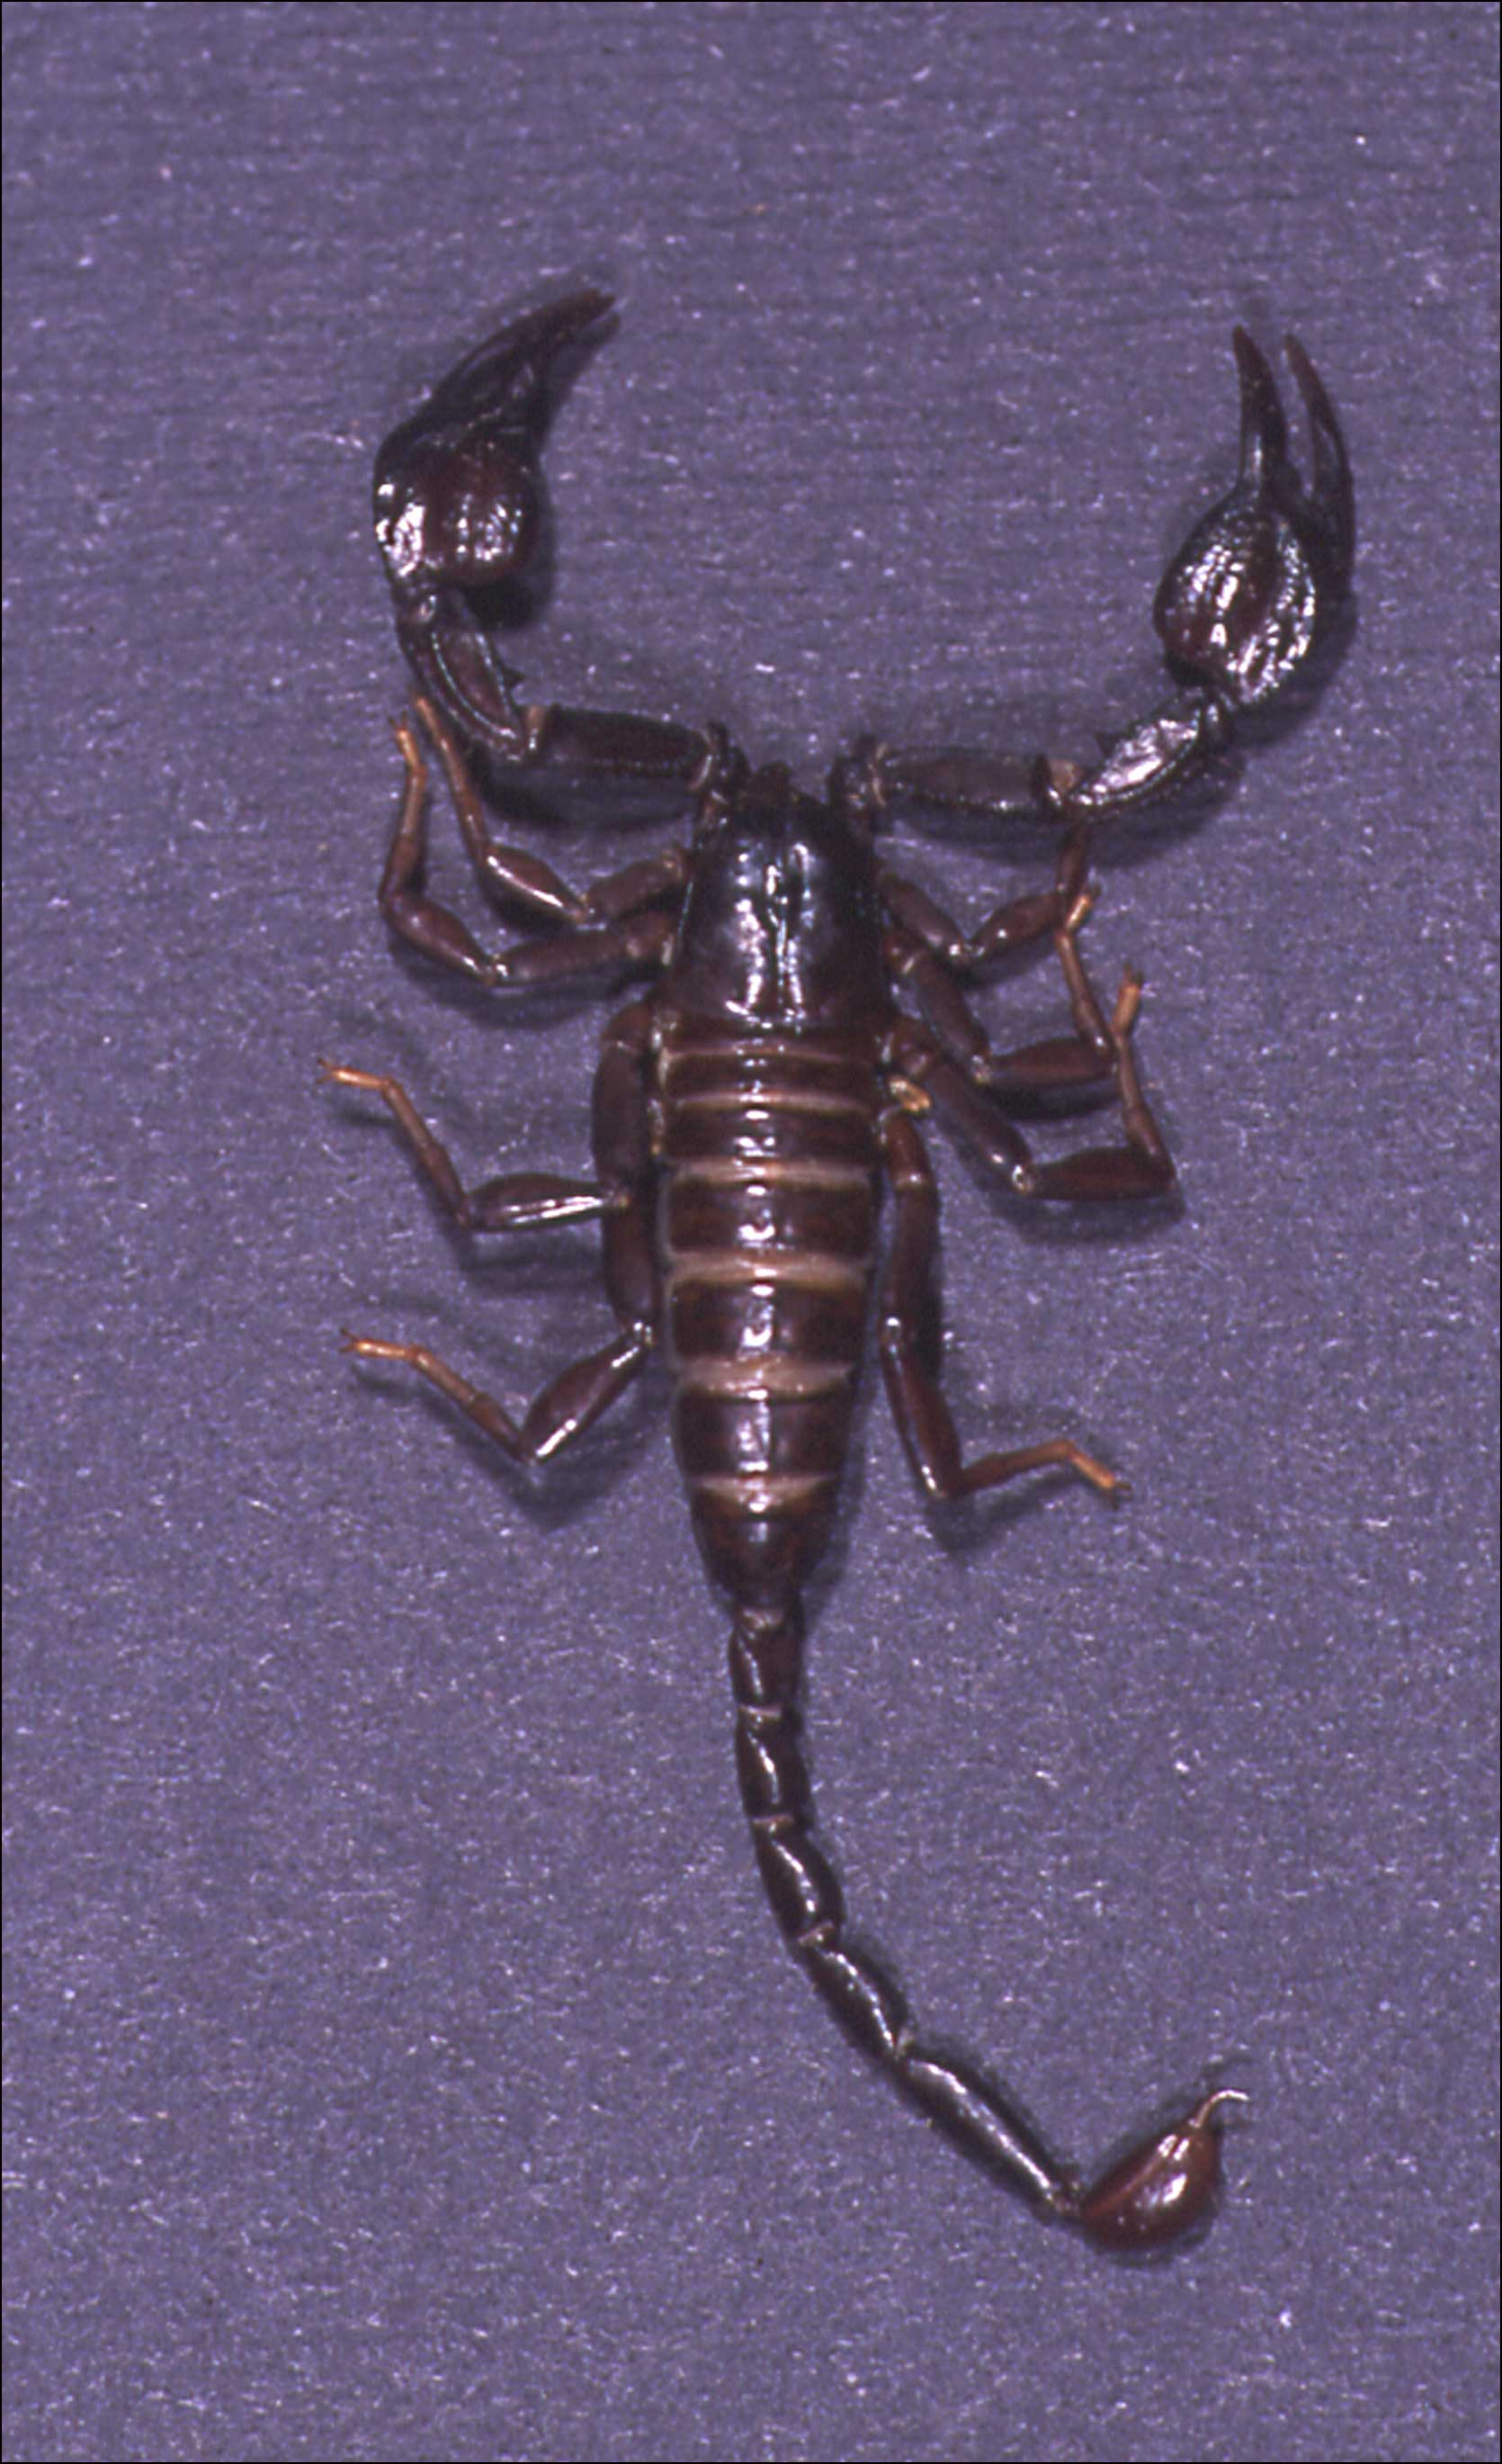 The Scorpion Files - European Scorpions